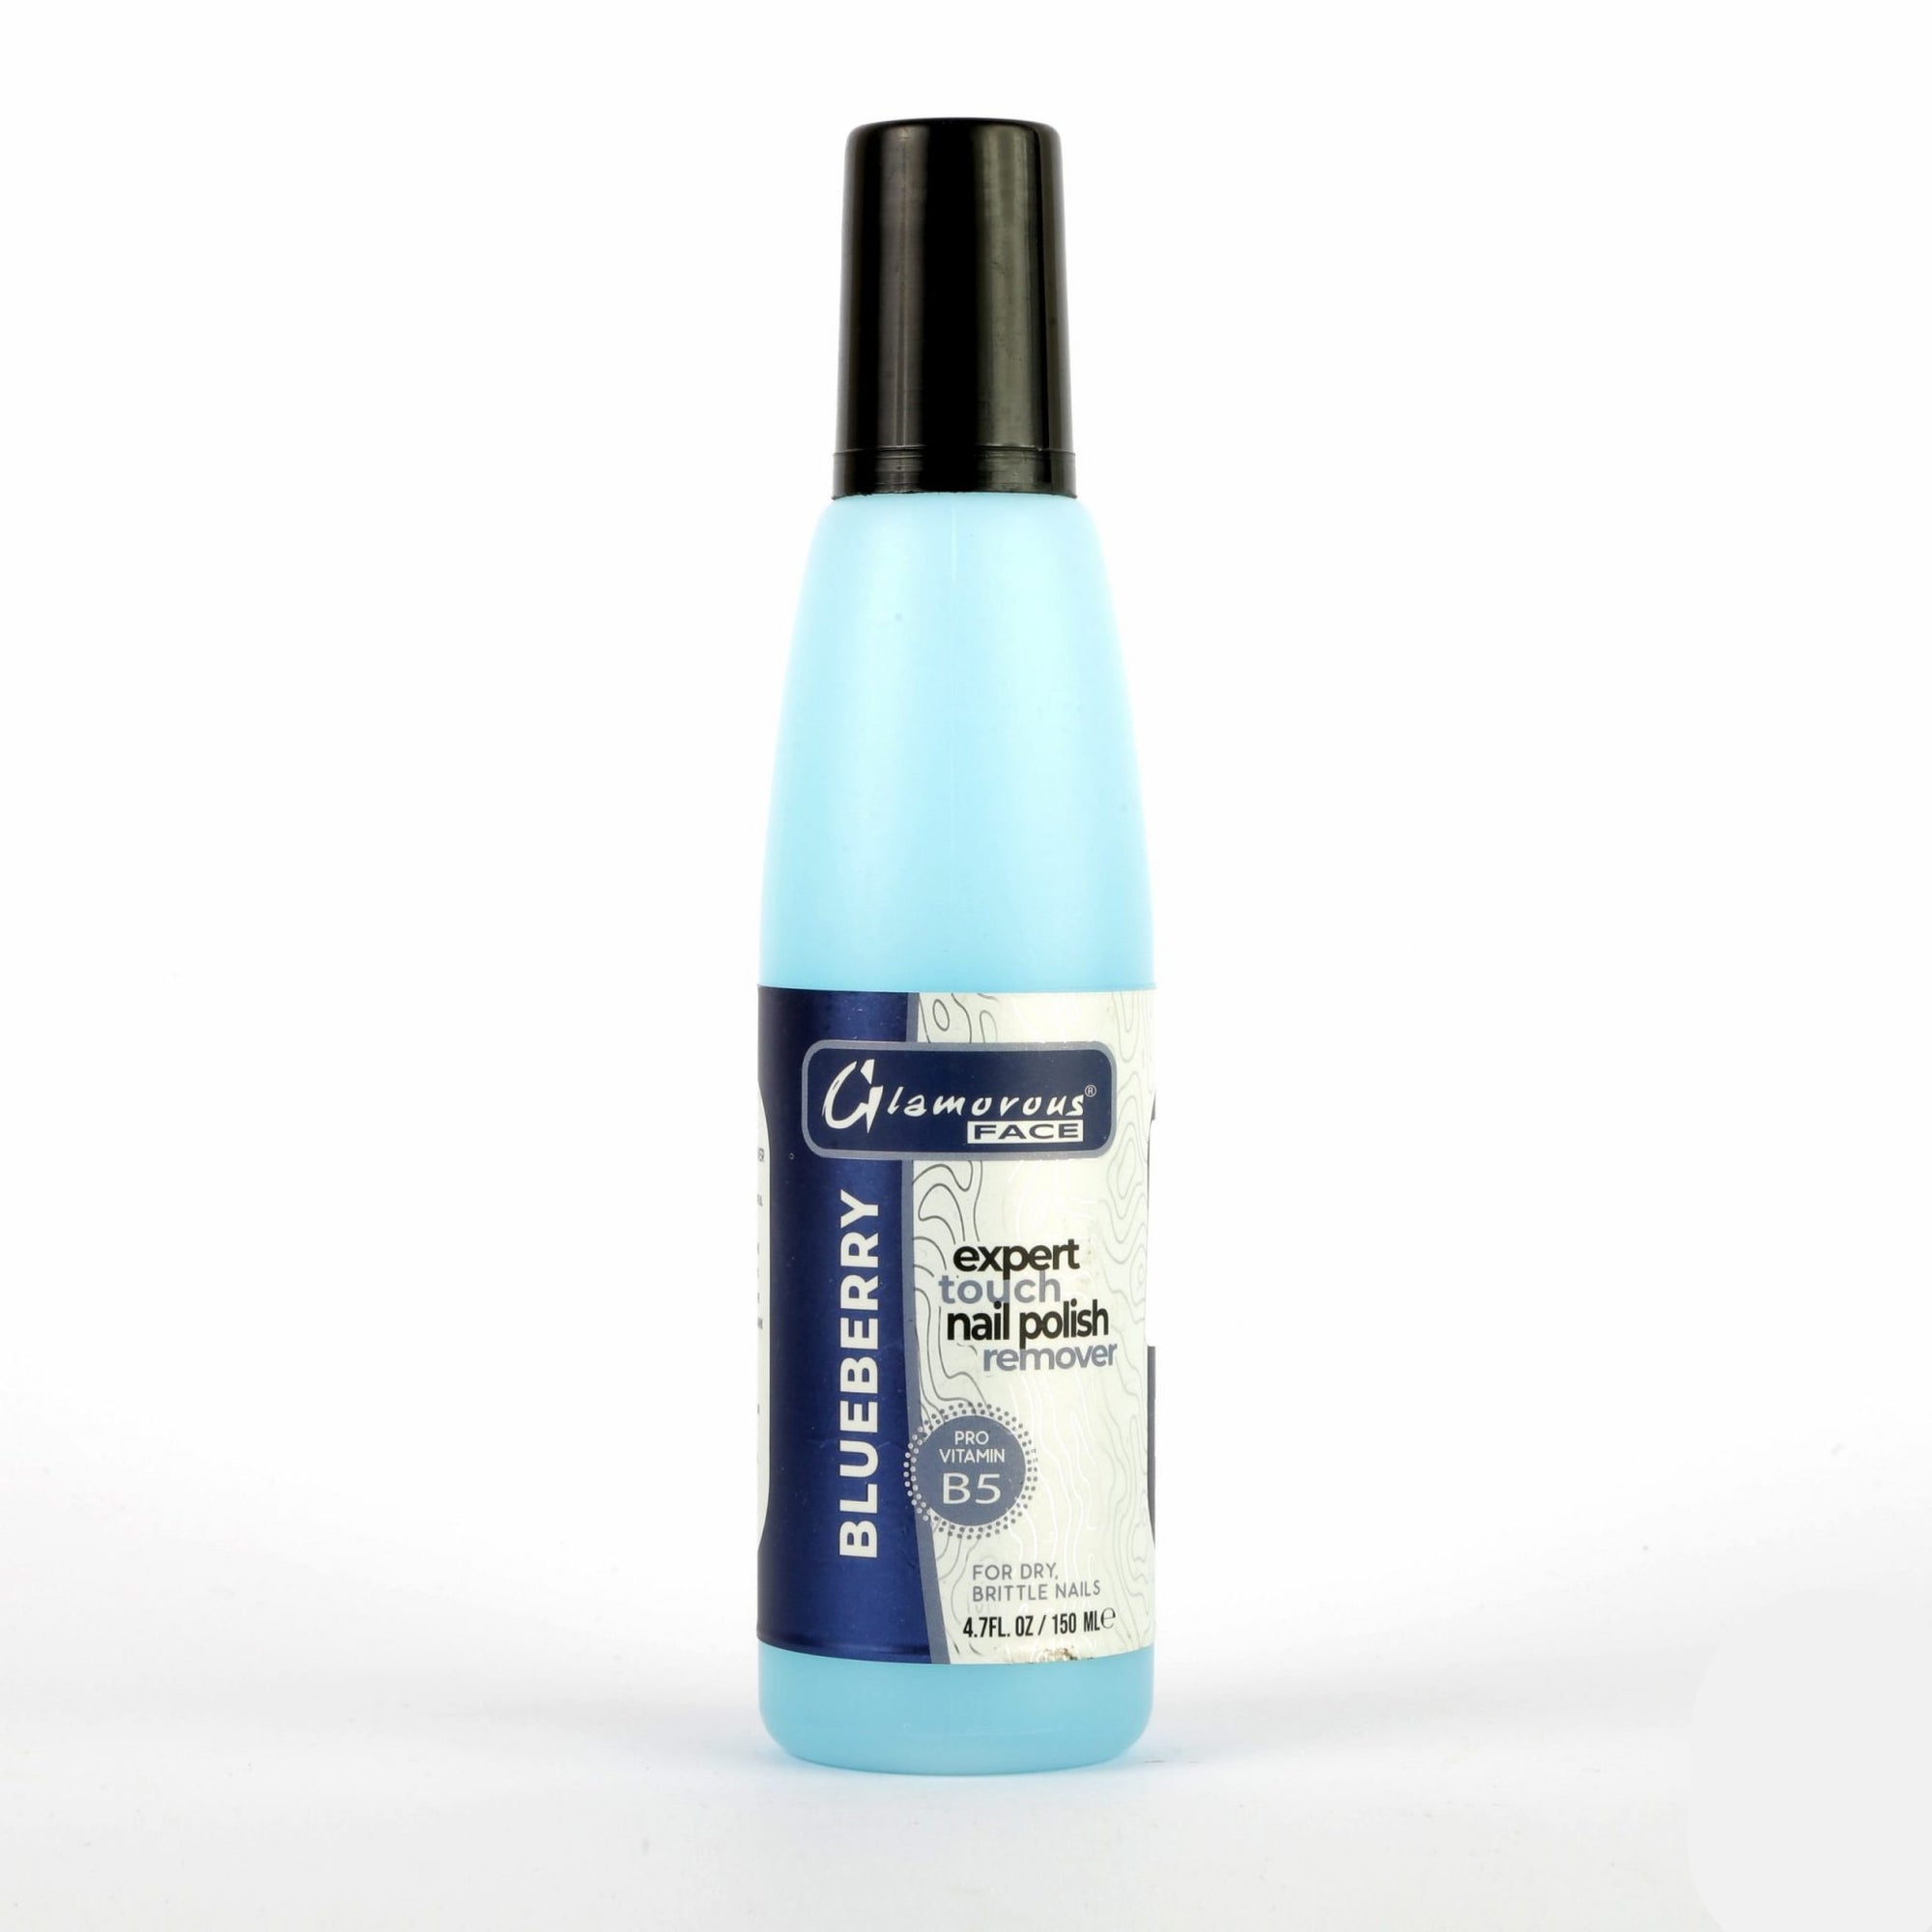 Glamorous Face Expert Touch Nail Polish Remover Pro Vitamin B5 Blueberry 150ml freeshipping - lasertag.pk